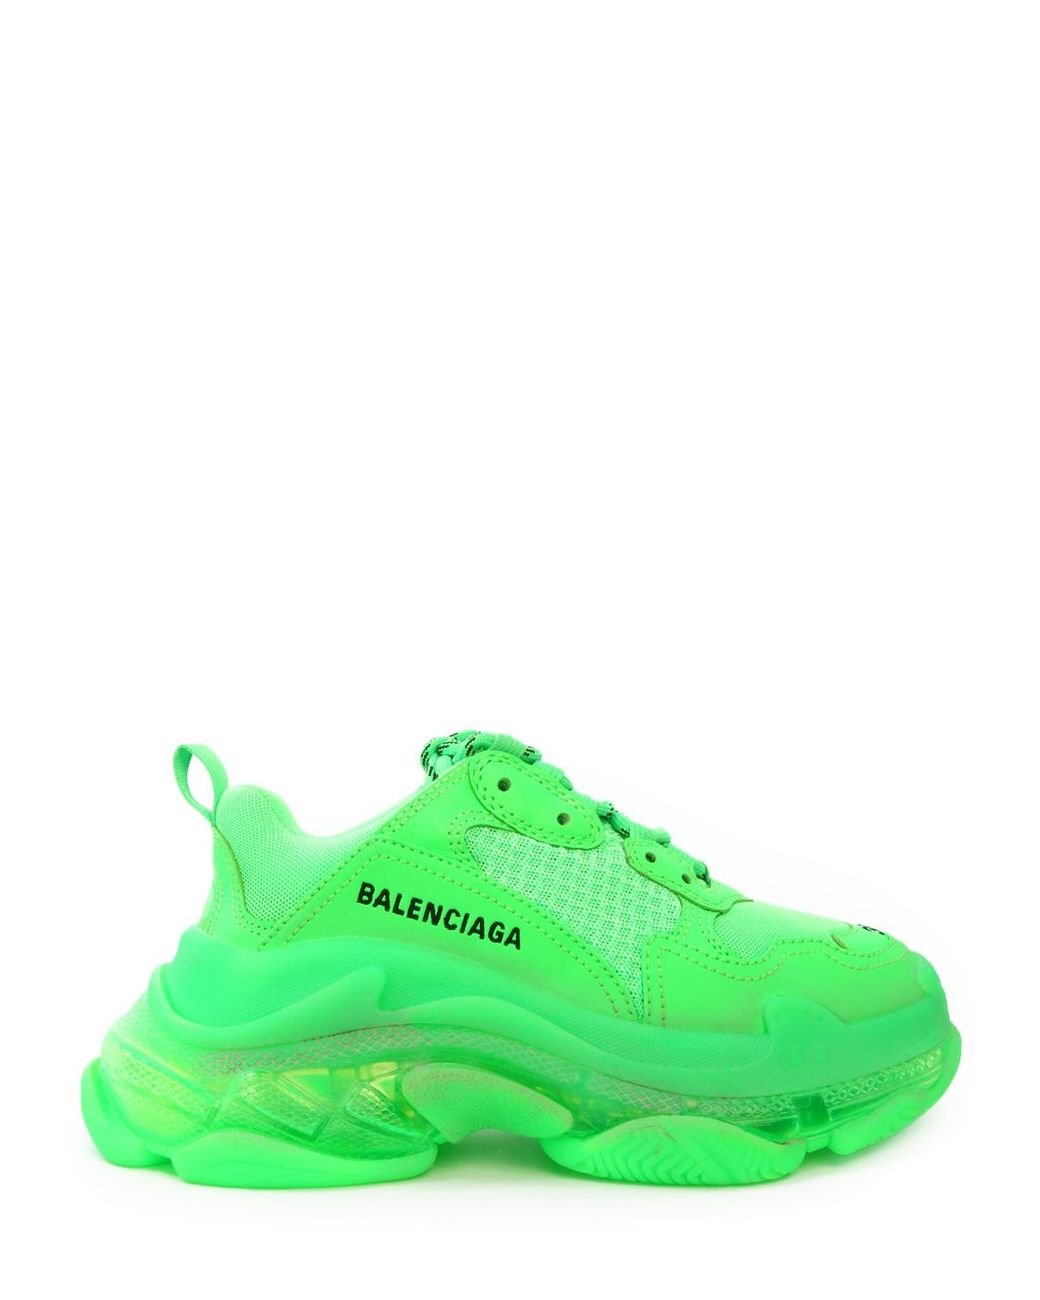 Slime Green Balenciaga Shoes | islamiyyat.com